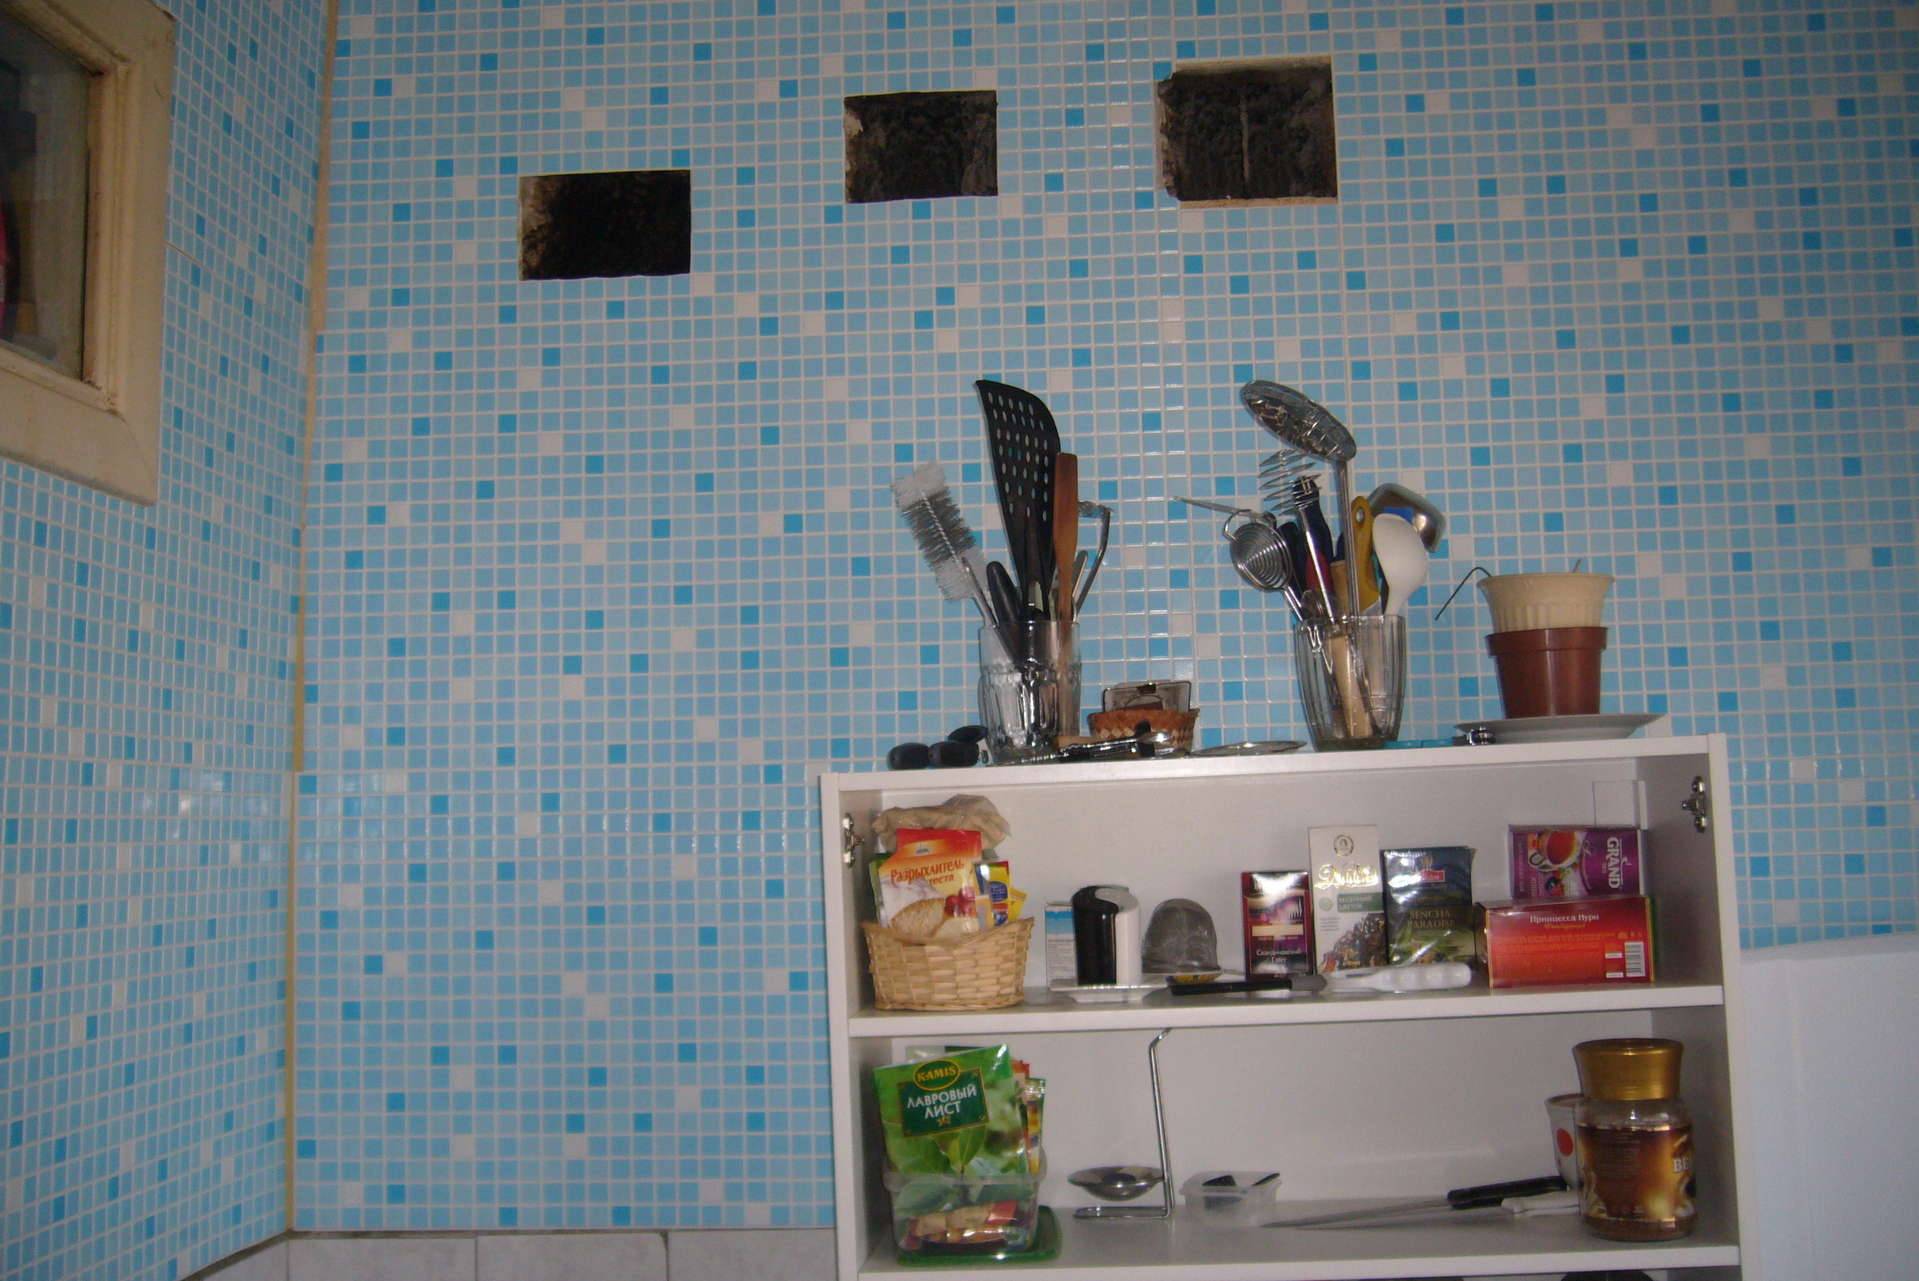 Пластиковые или пвх гибкие панели для отделки стен: рекомендации оформления стен кухни листовыми панелями и отделка под плитку